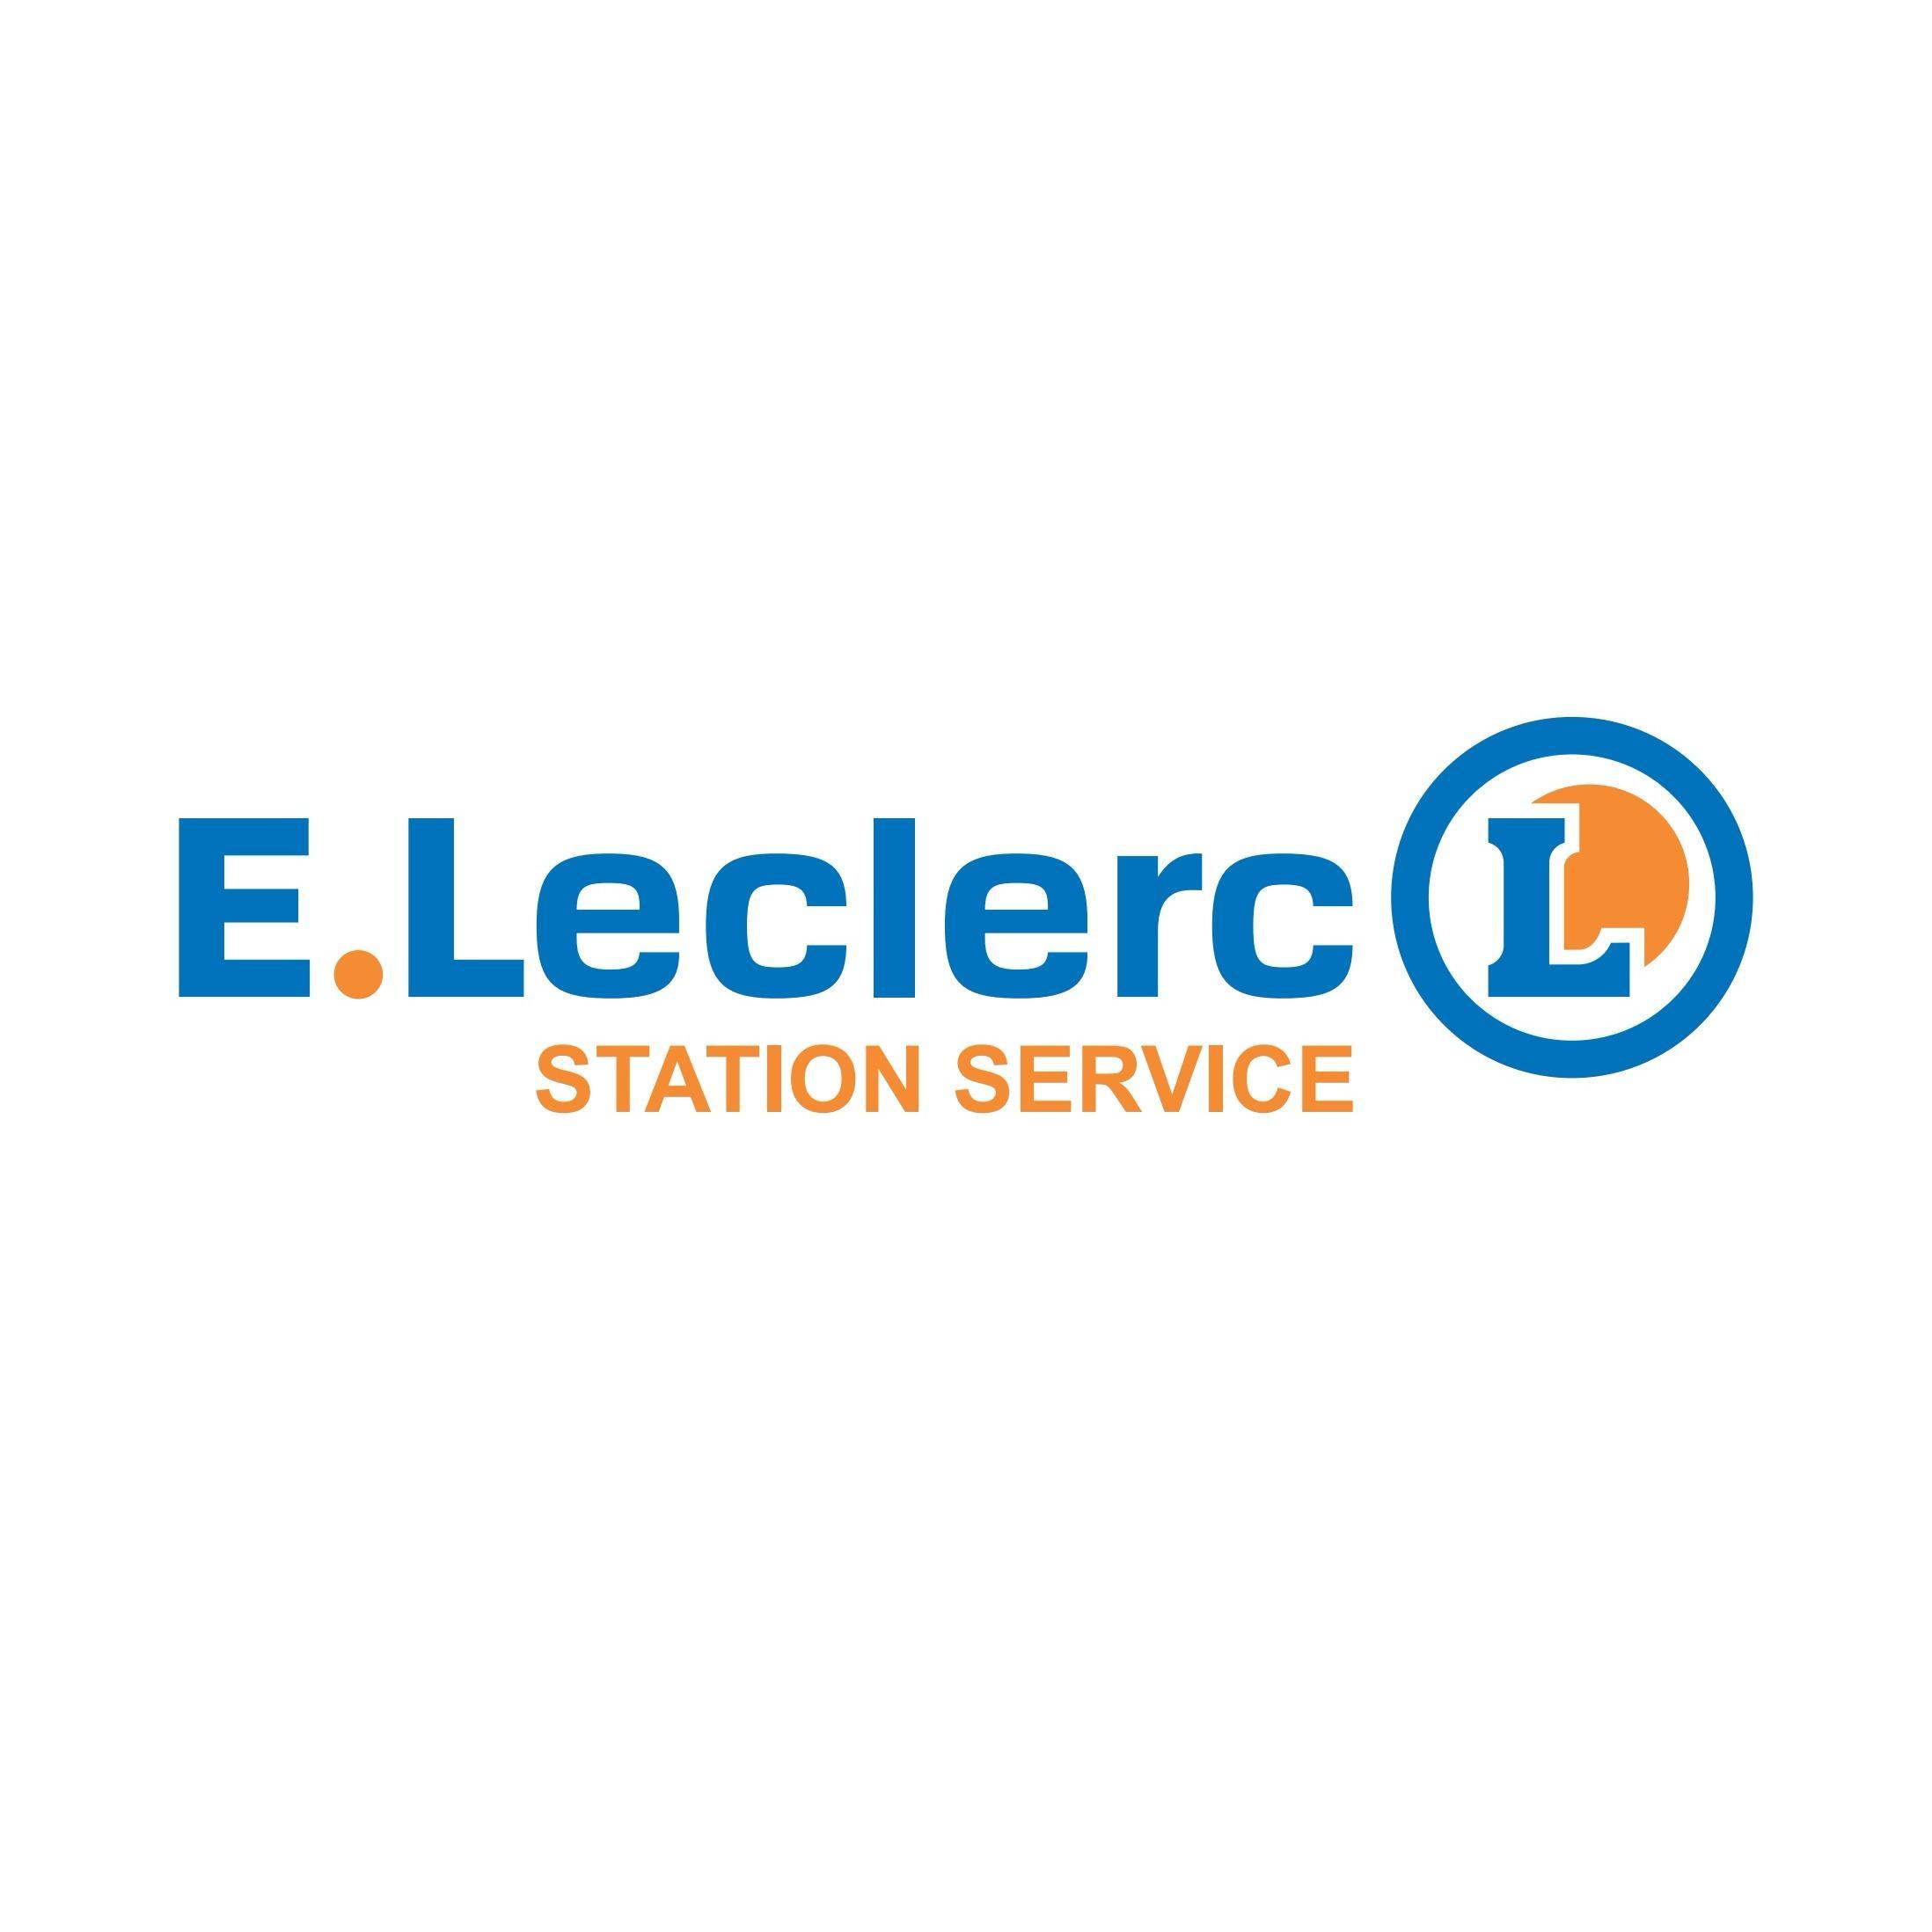 E.leclerc Station Service Josselin